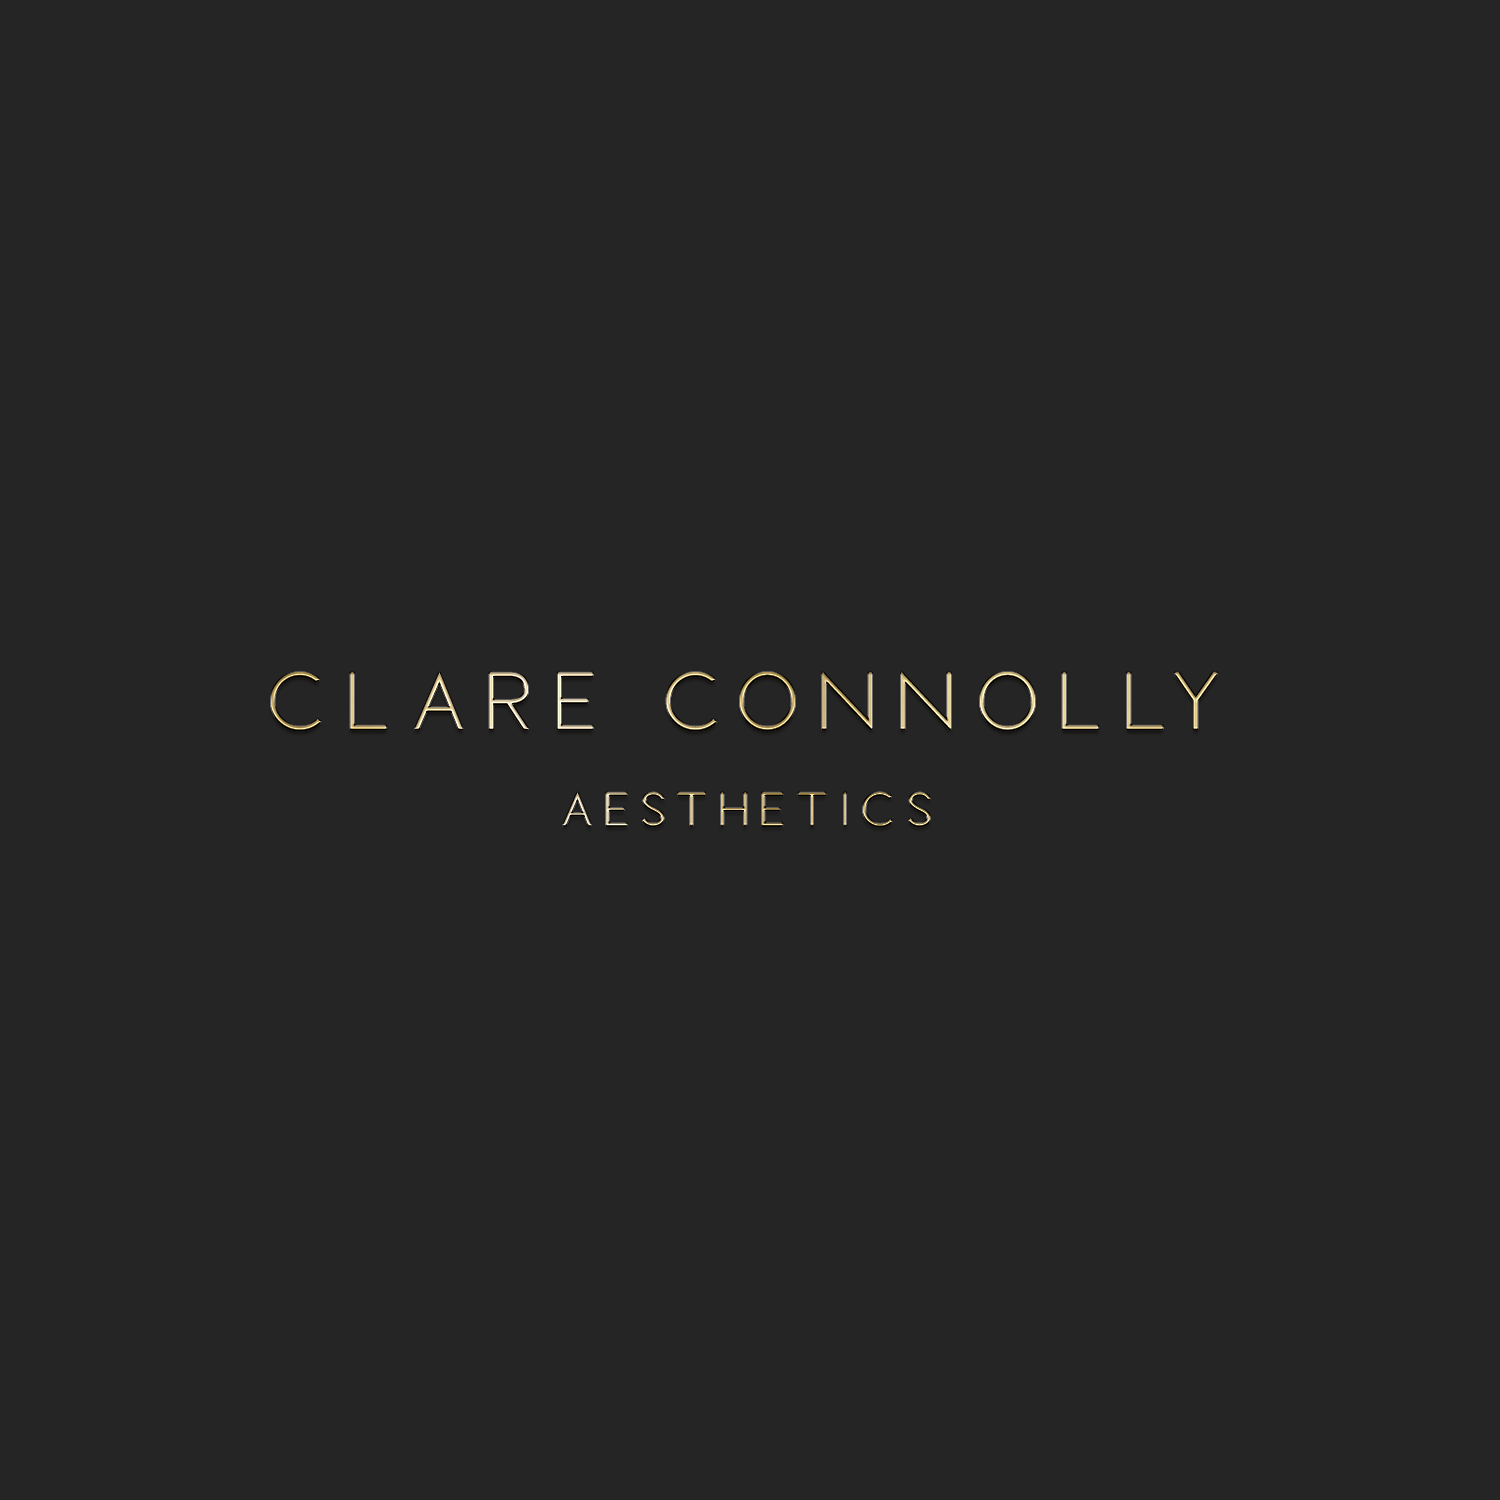 Clare Connolly Aesthetics